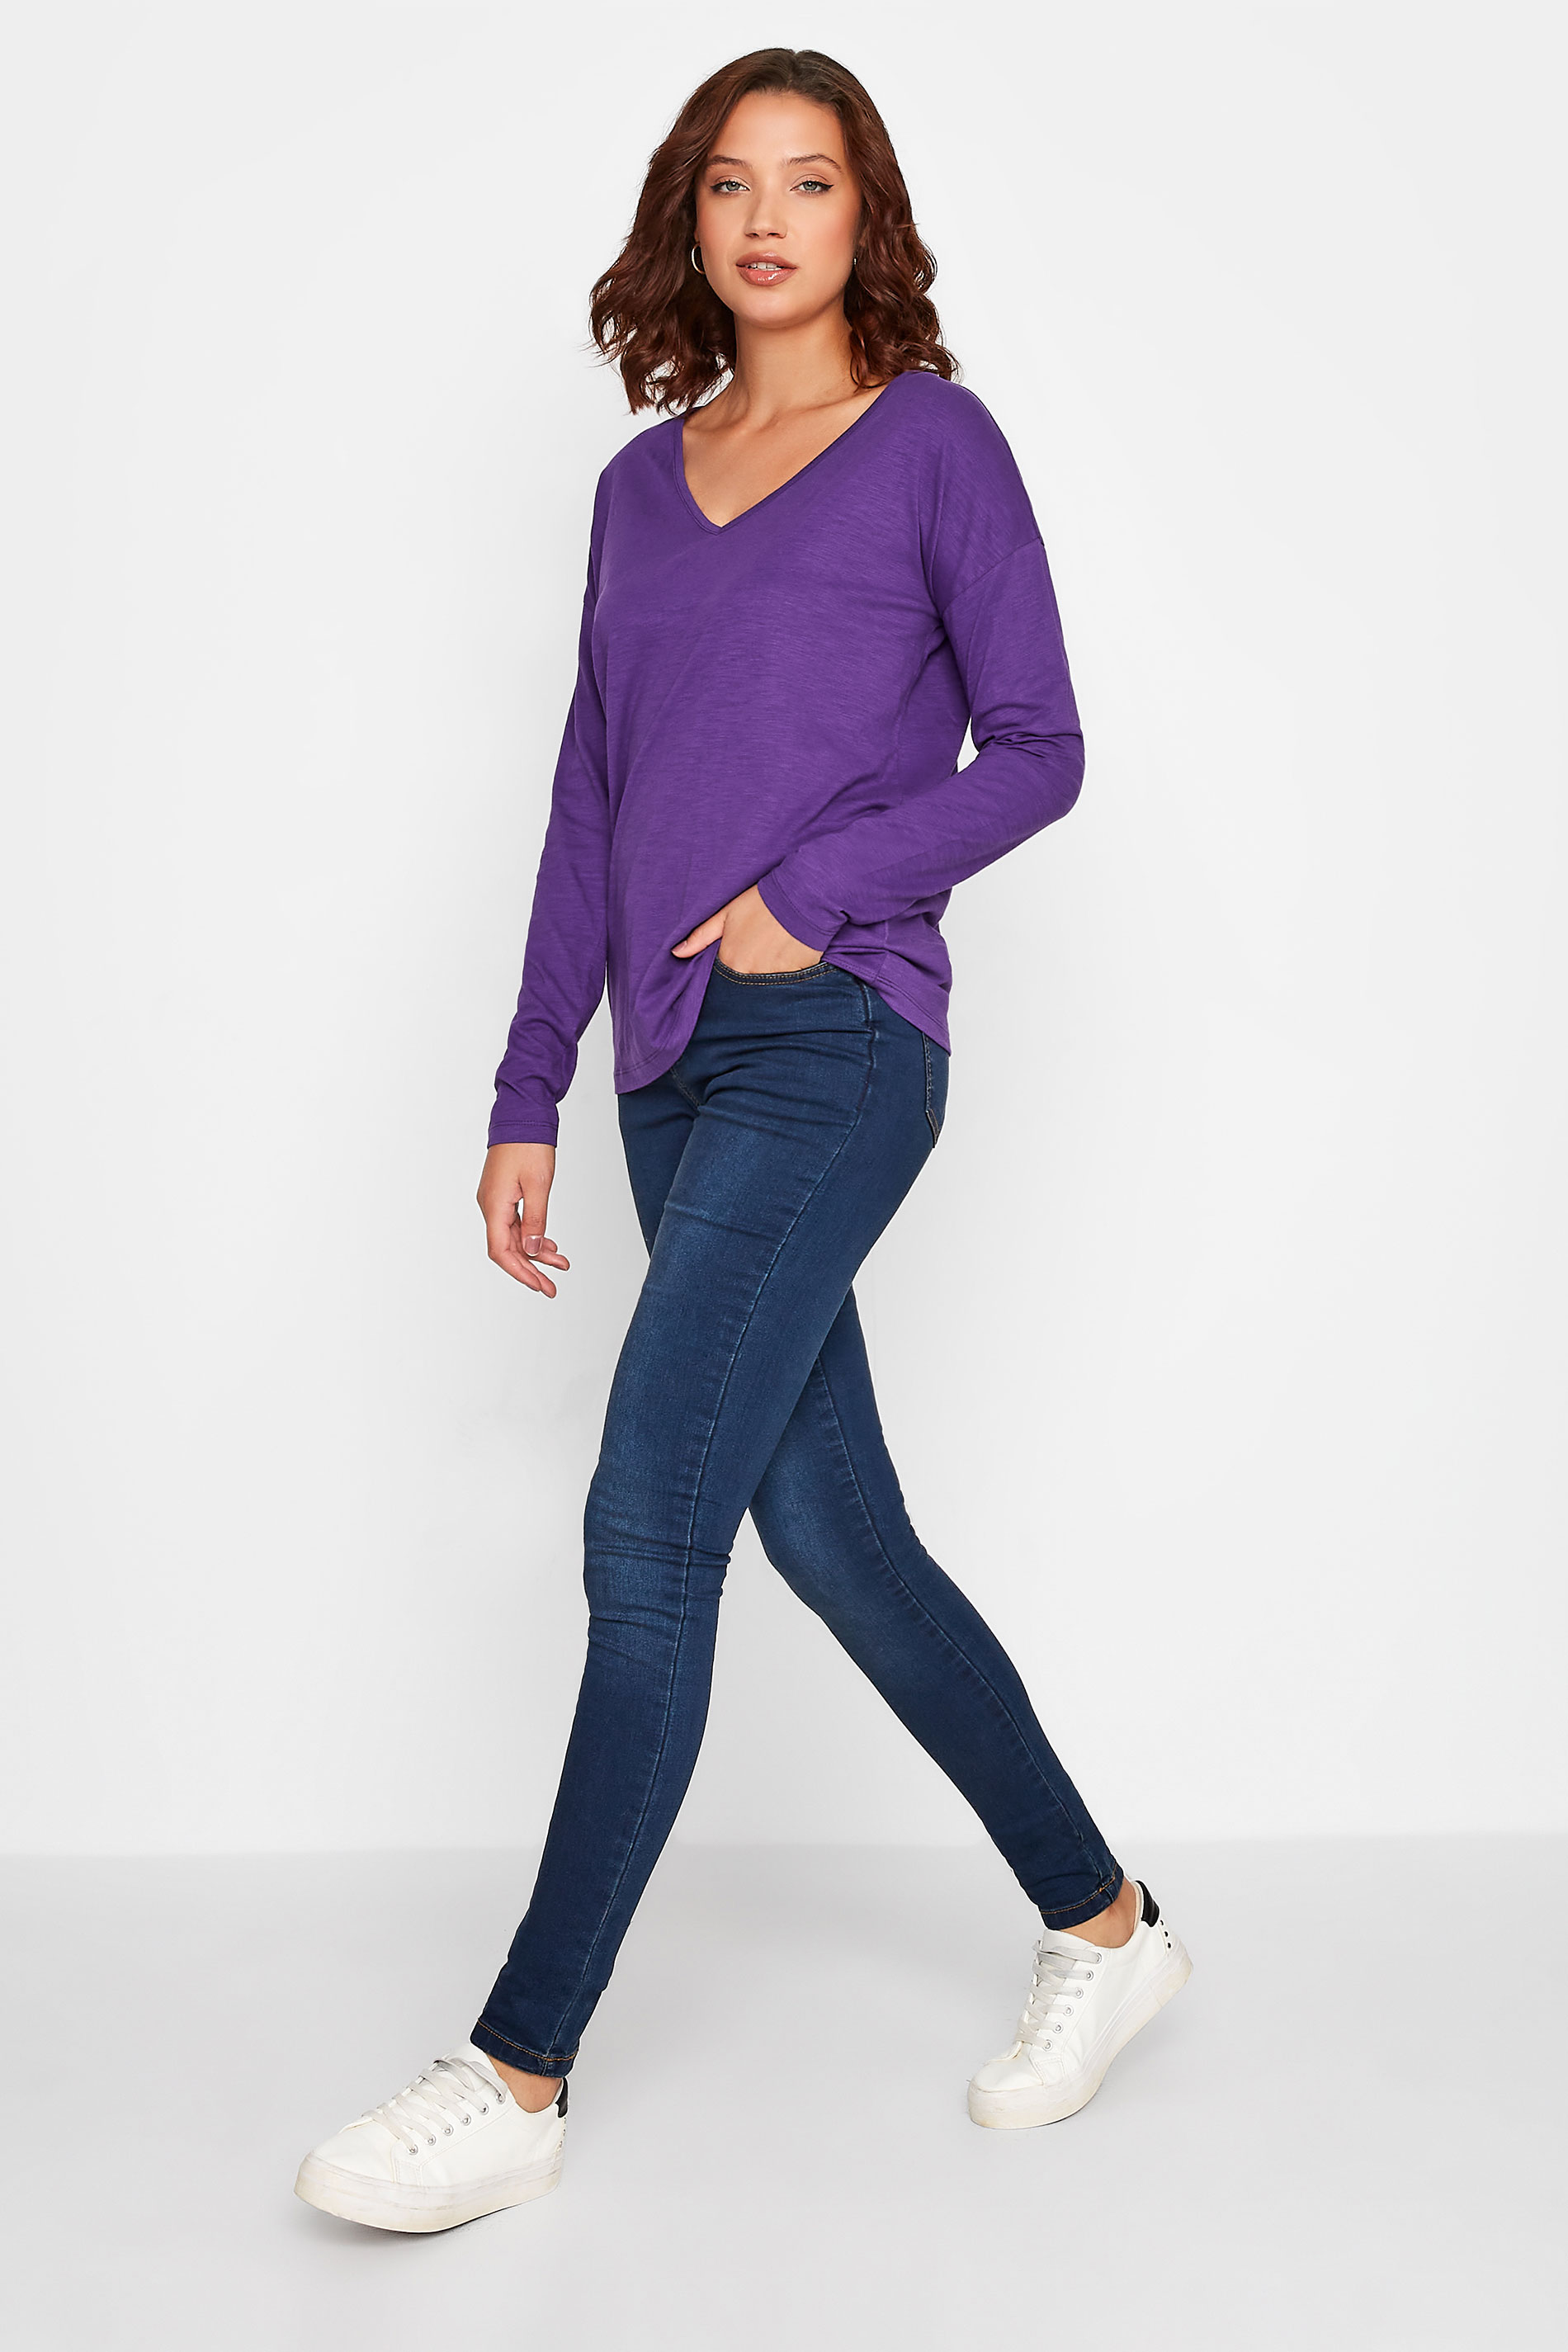 LTS Tall Women's Purple V-Neck Long Sleeve Cotton T-Shirt | Long Tall Sally 2